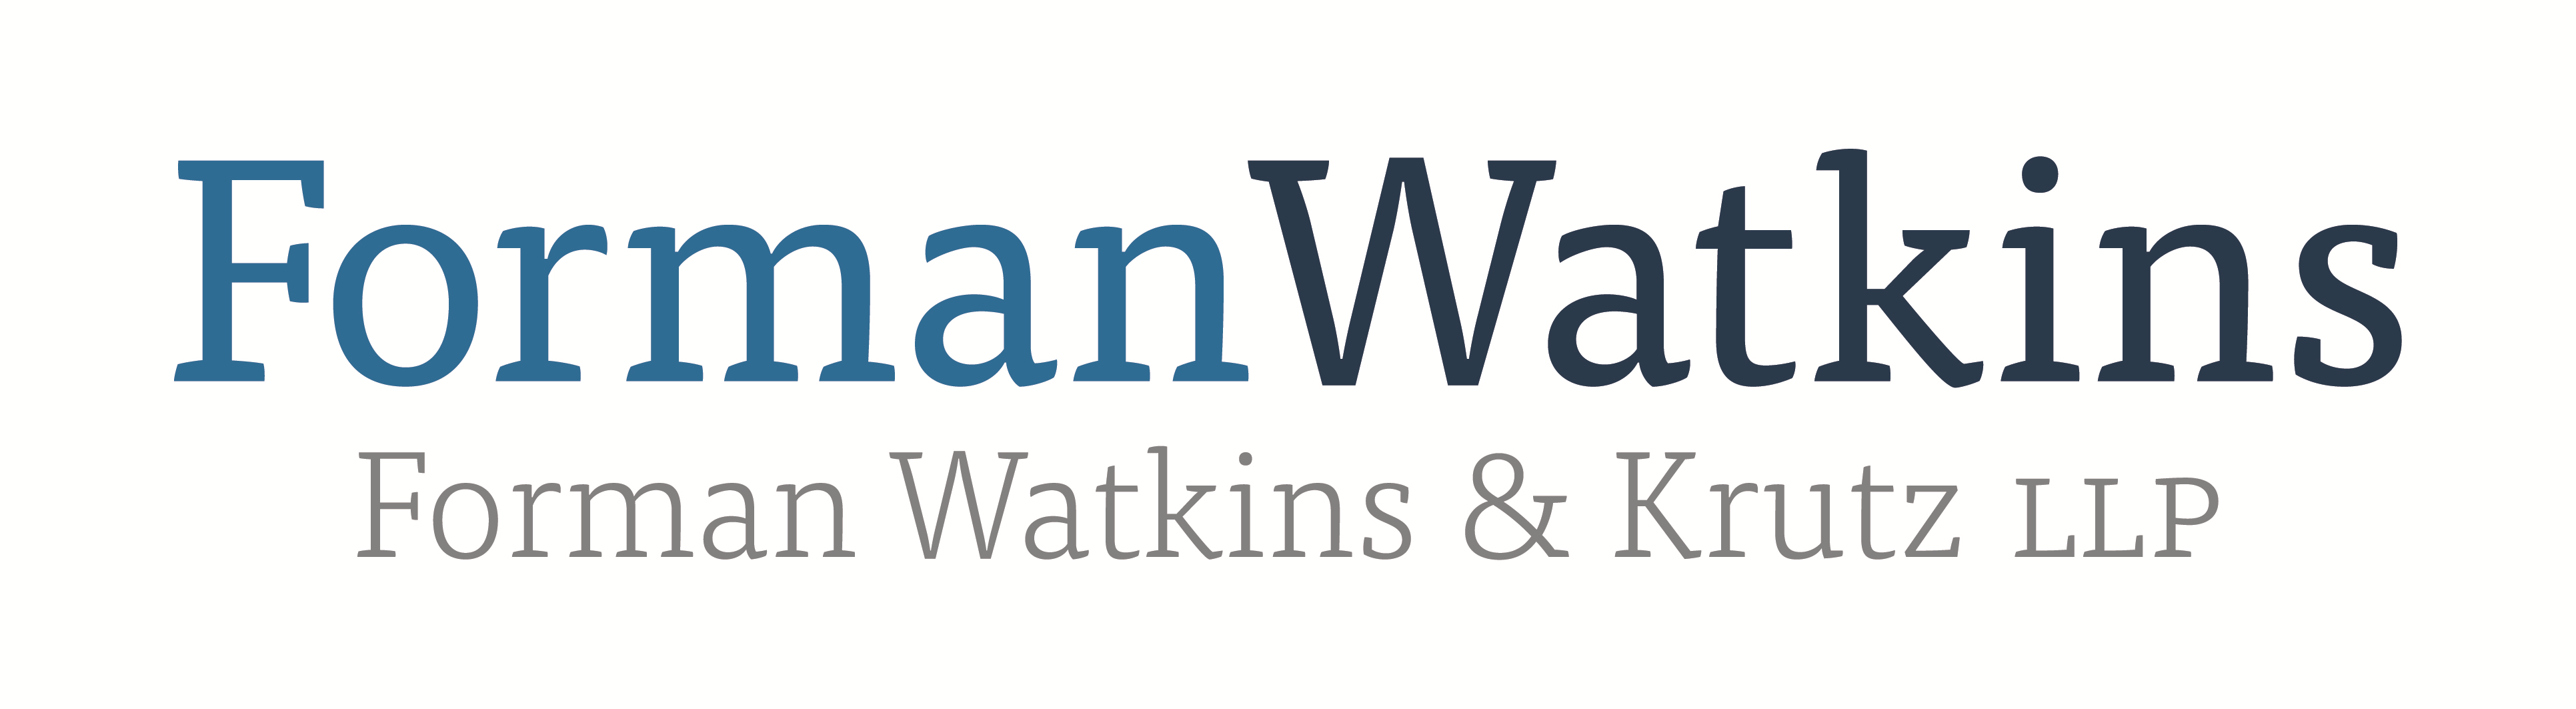 Forman Watkins & Krutz LLP logo